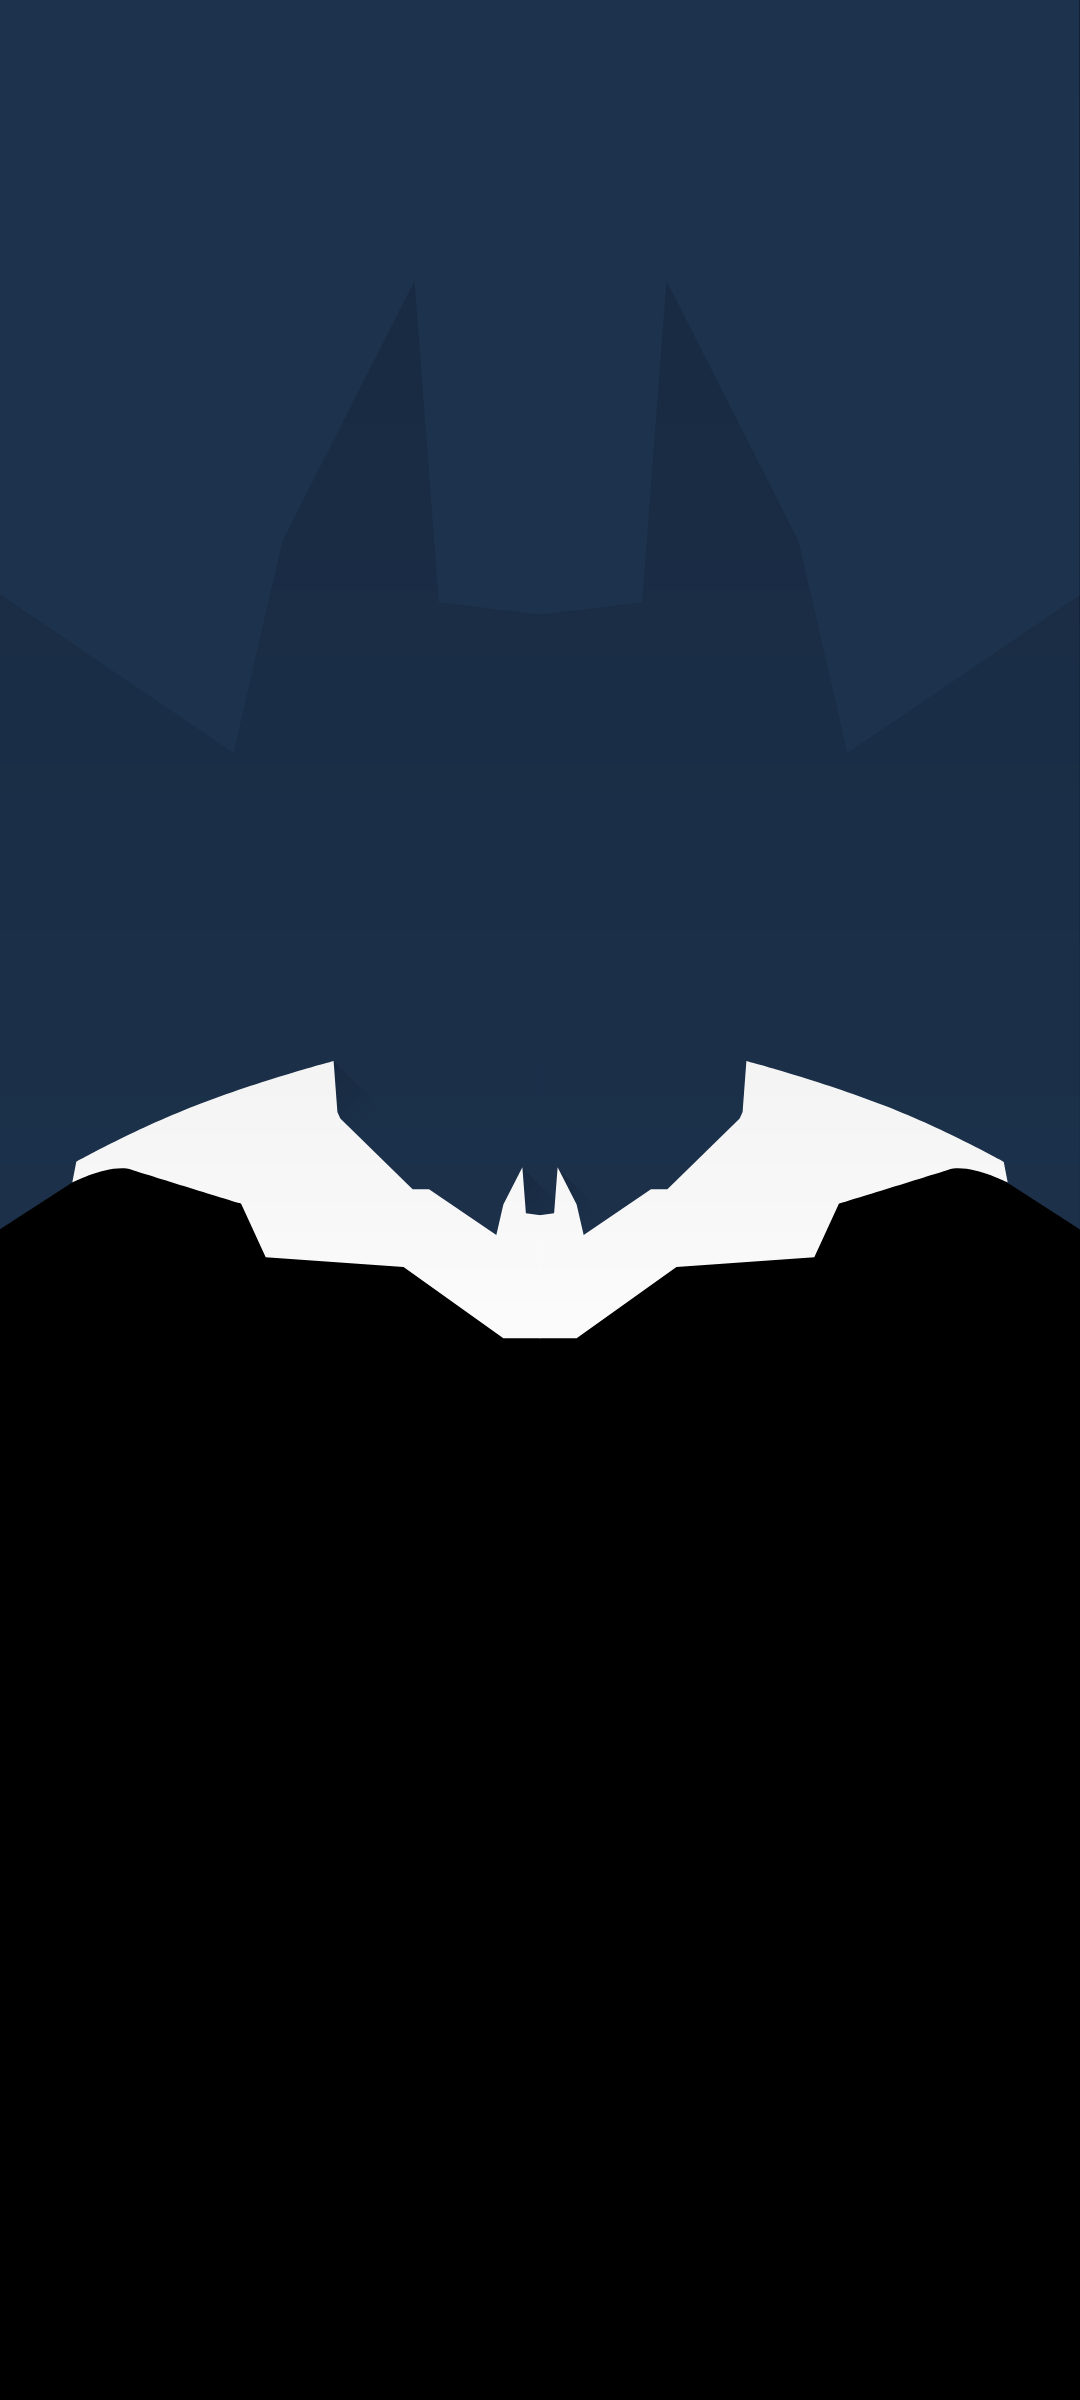 Batman logo on a black and blue background - 1080x2400